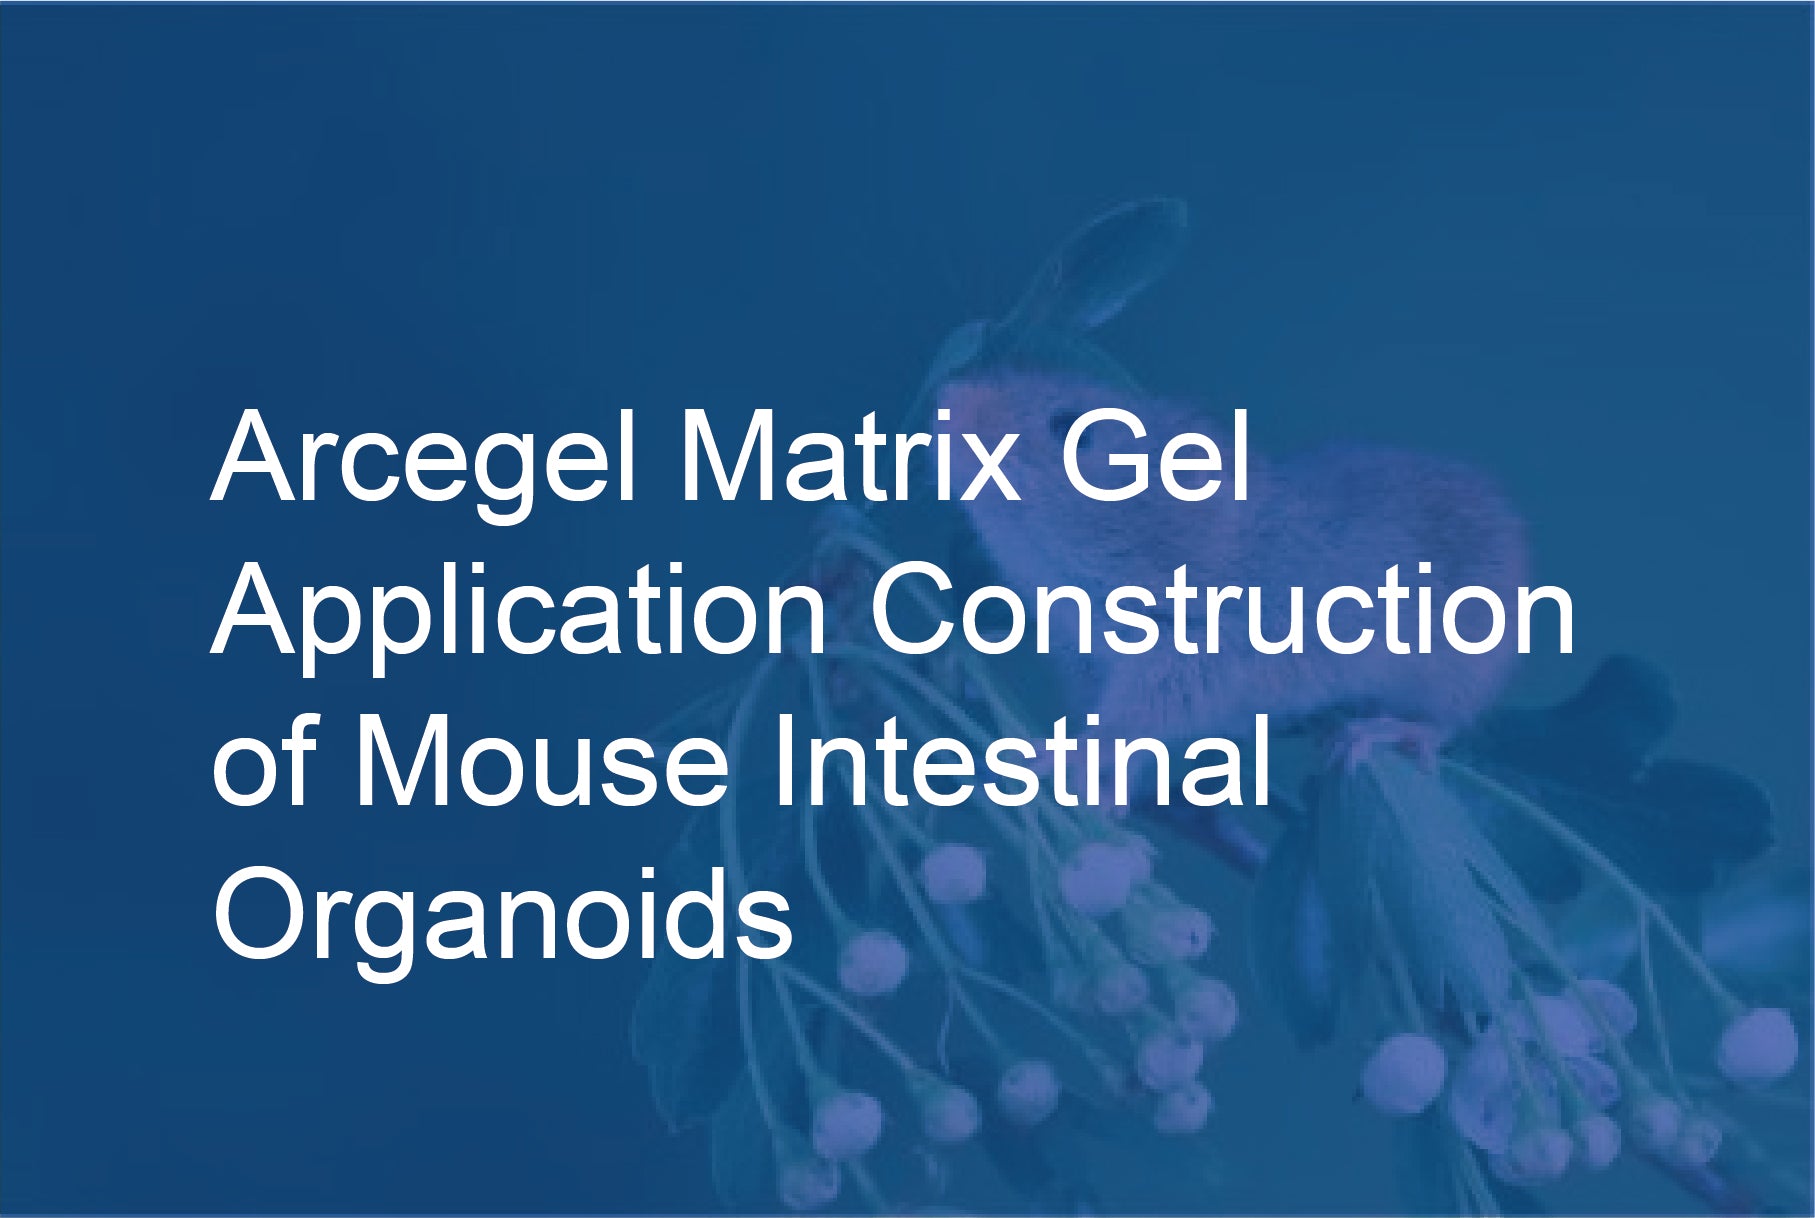 Arcegel Matrix Gel Application - Construction of Mouse Intestinal Organoids